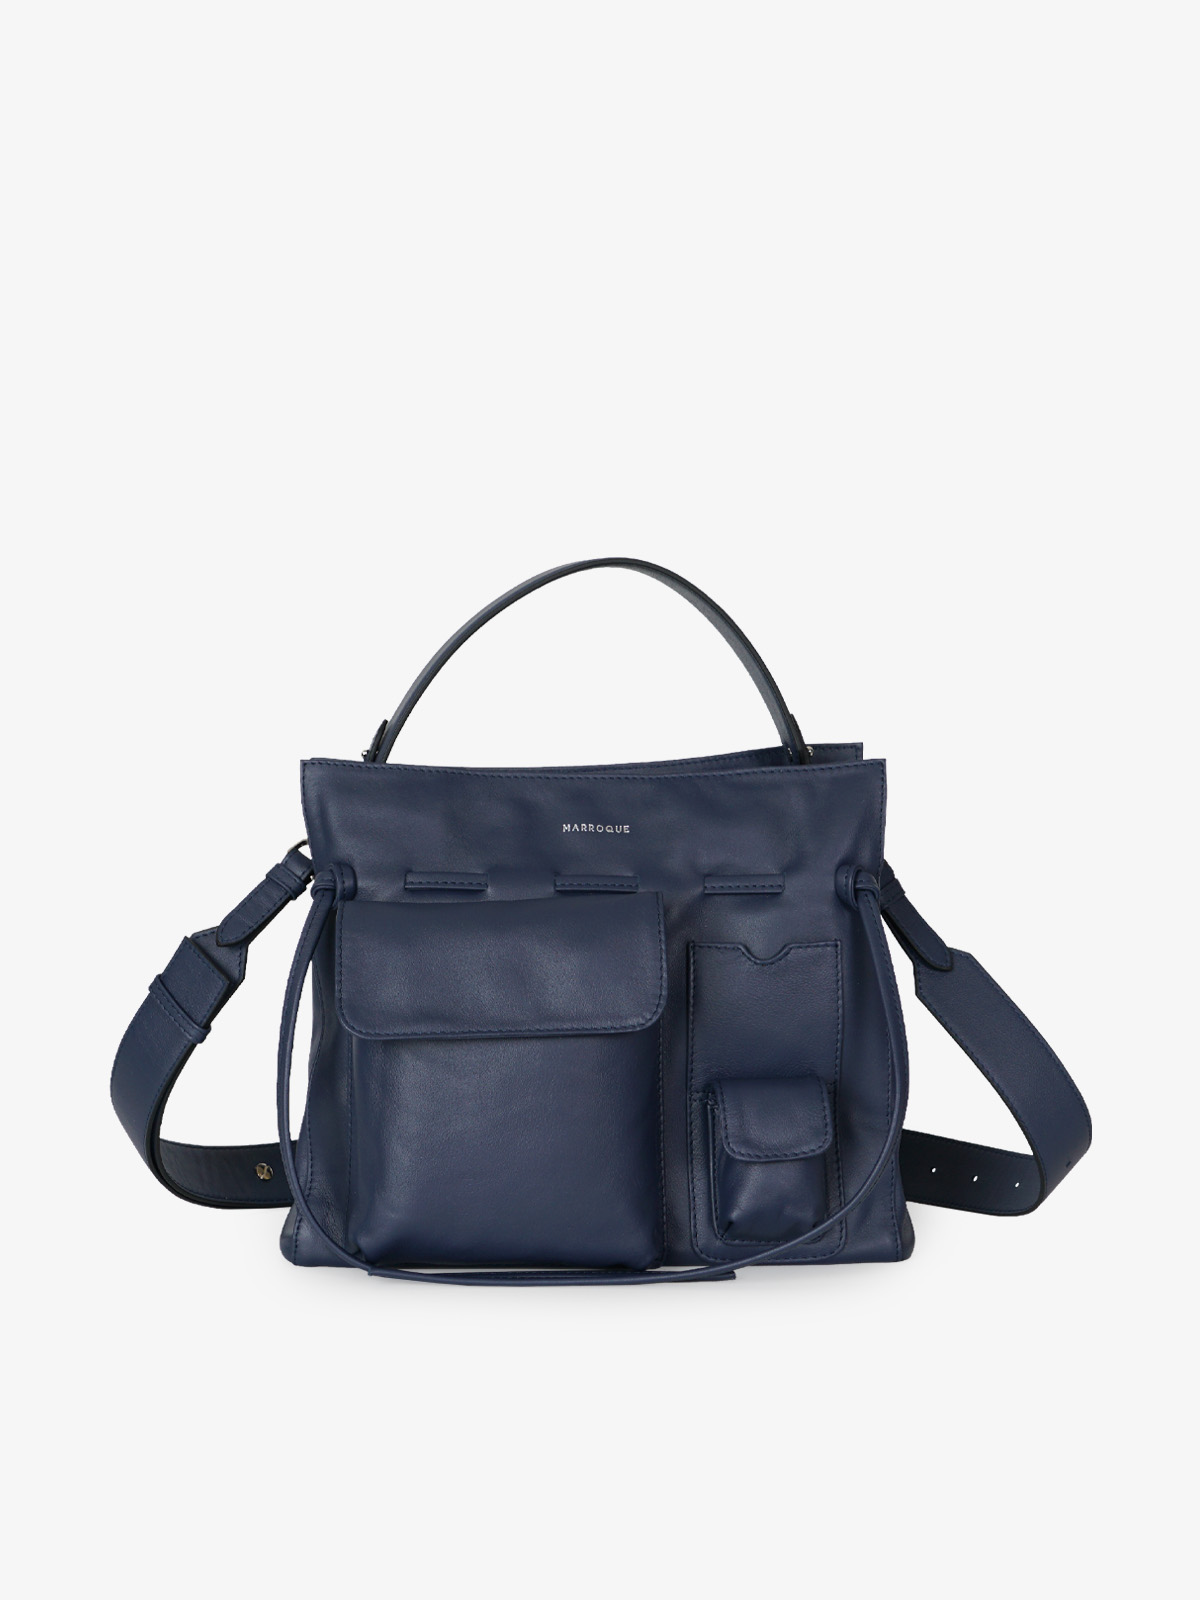 Marroque wendy 28 genuine leather bag crossbody bag in Dark Blue